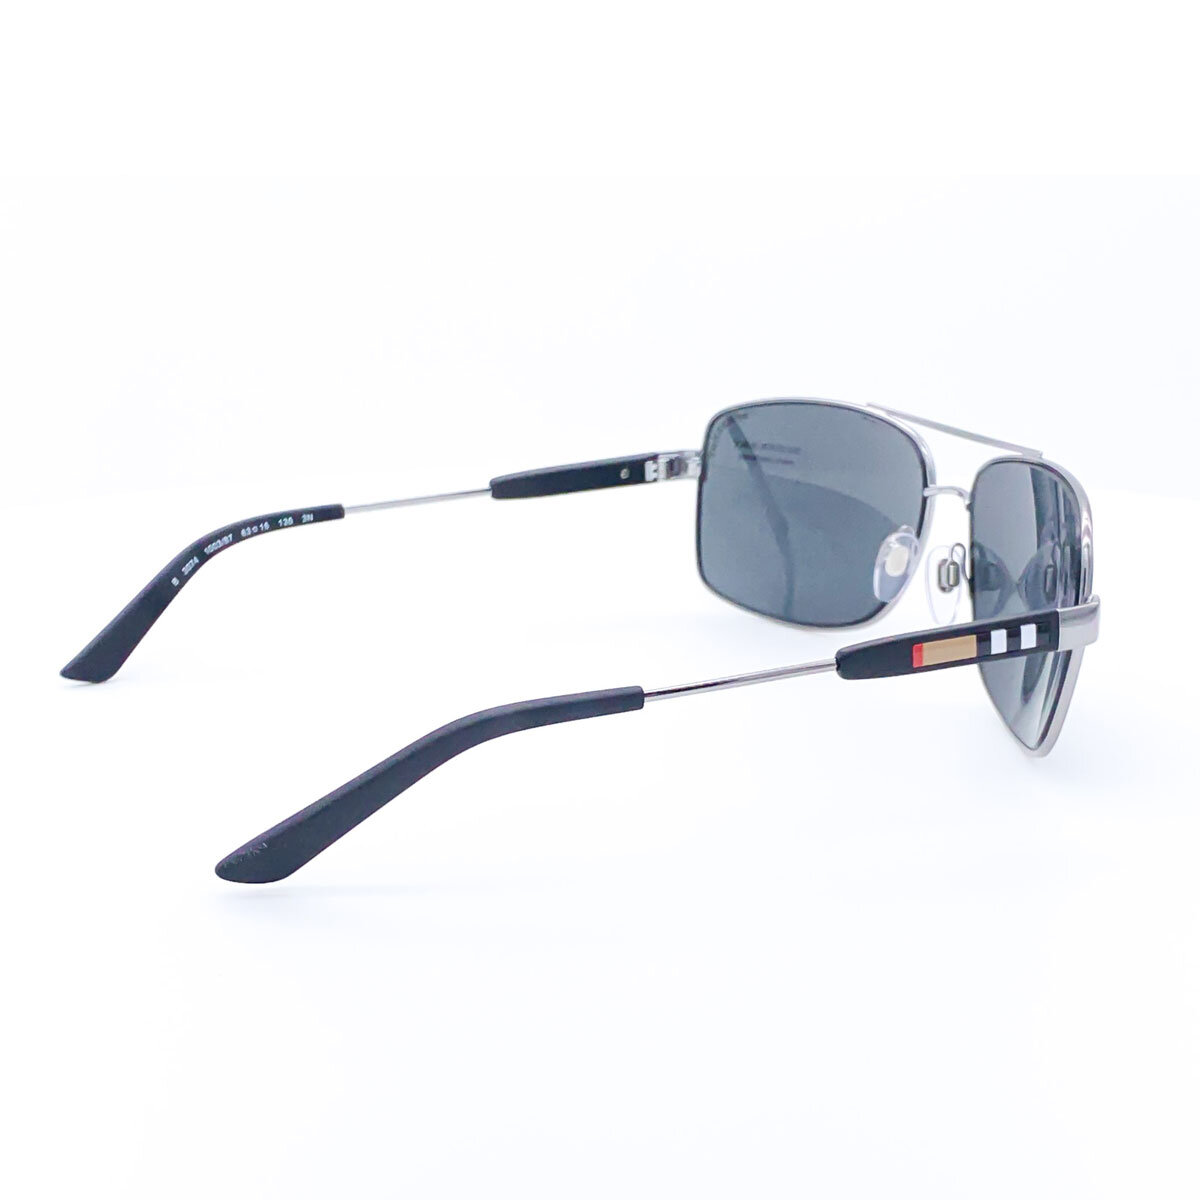 Burberry Gunmetal Sunglasses with Grey Lenses, BE3074 100387